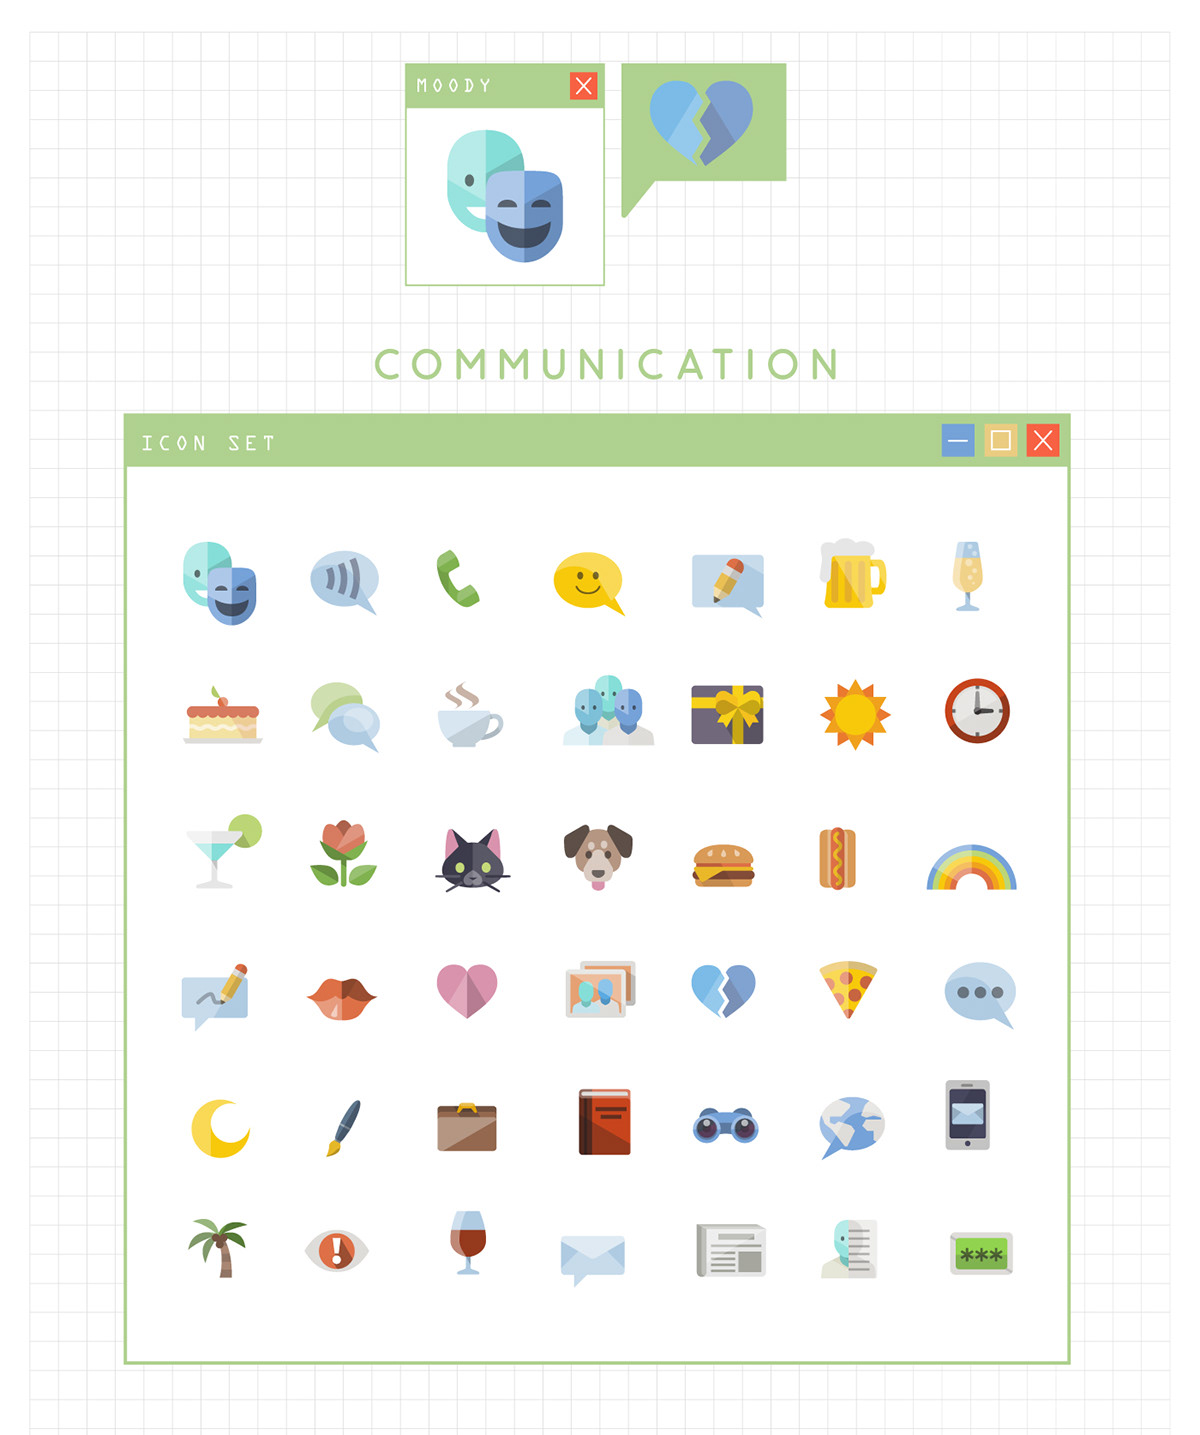 icons flat icon icon packs set icons general accounting communication business iconshock